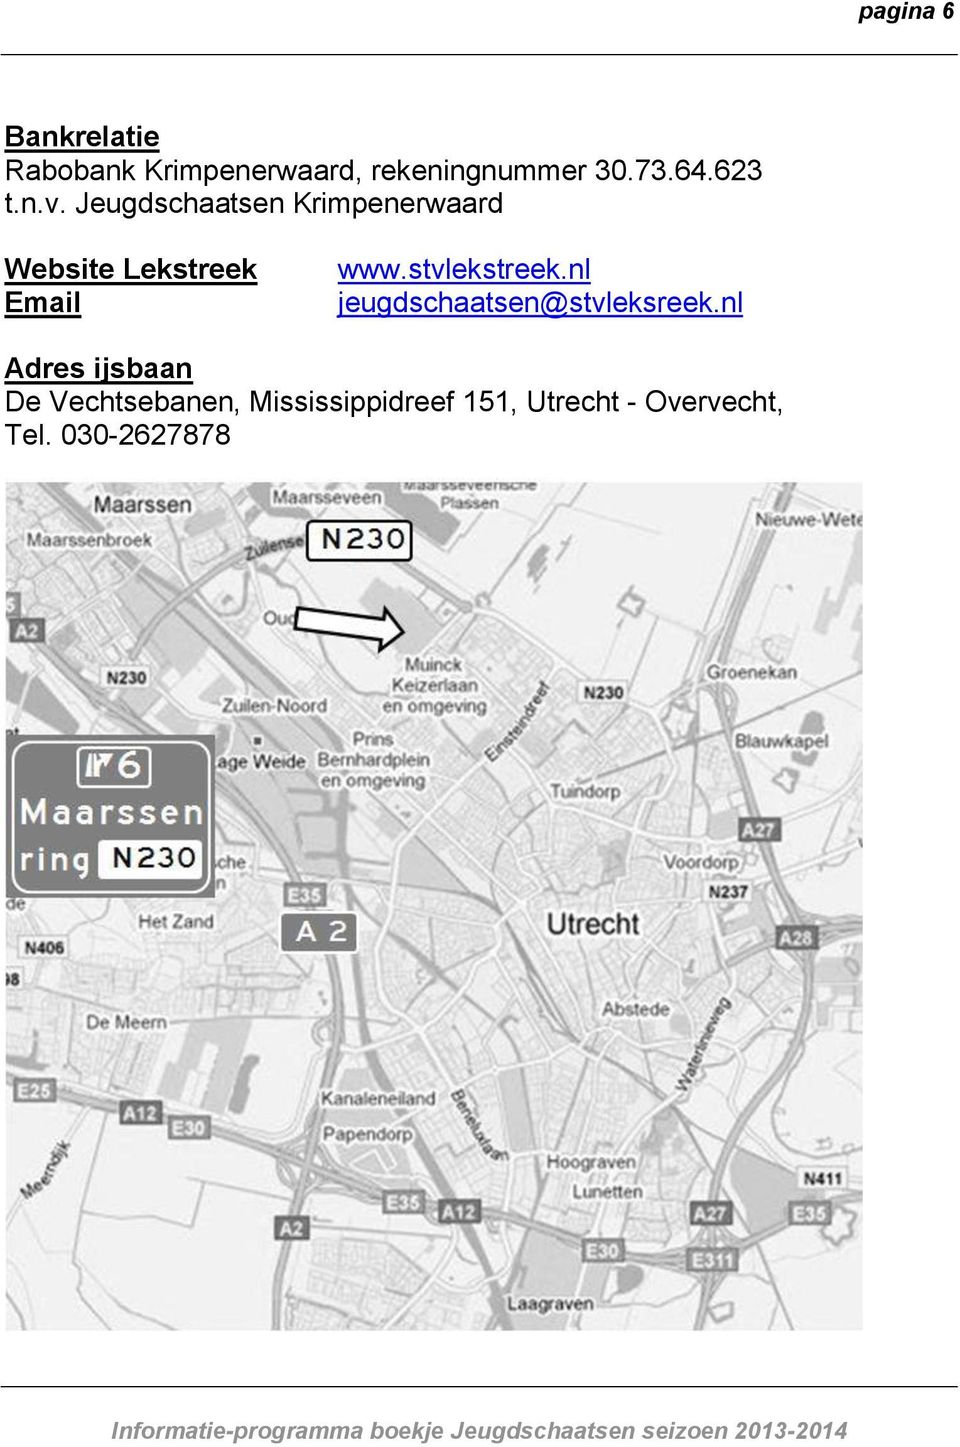 Jeugdschaatsen Krimpenerwaard Website Lekstreek Email www.